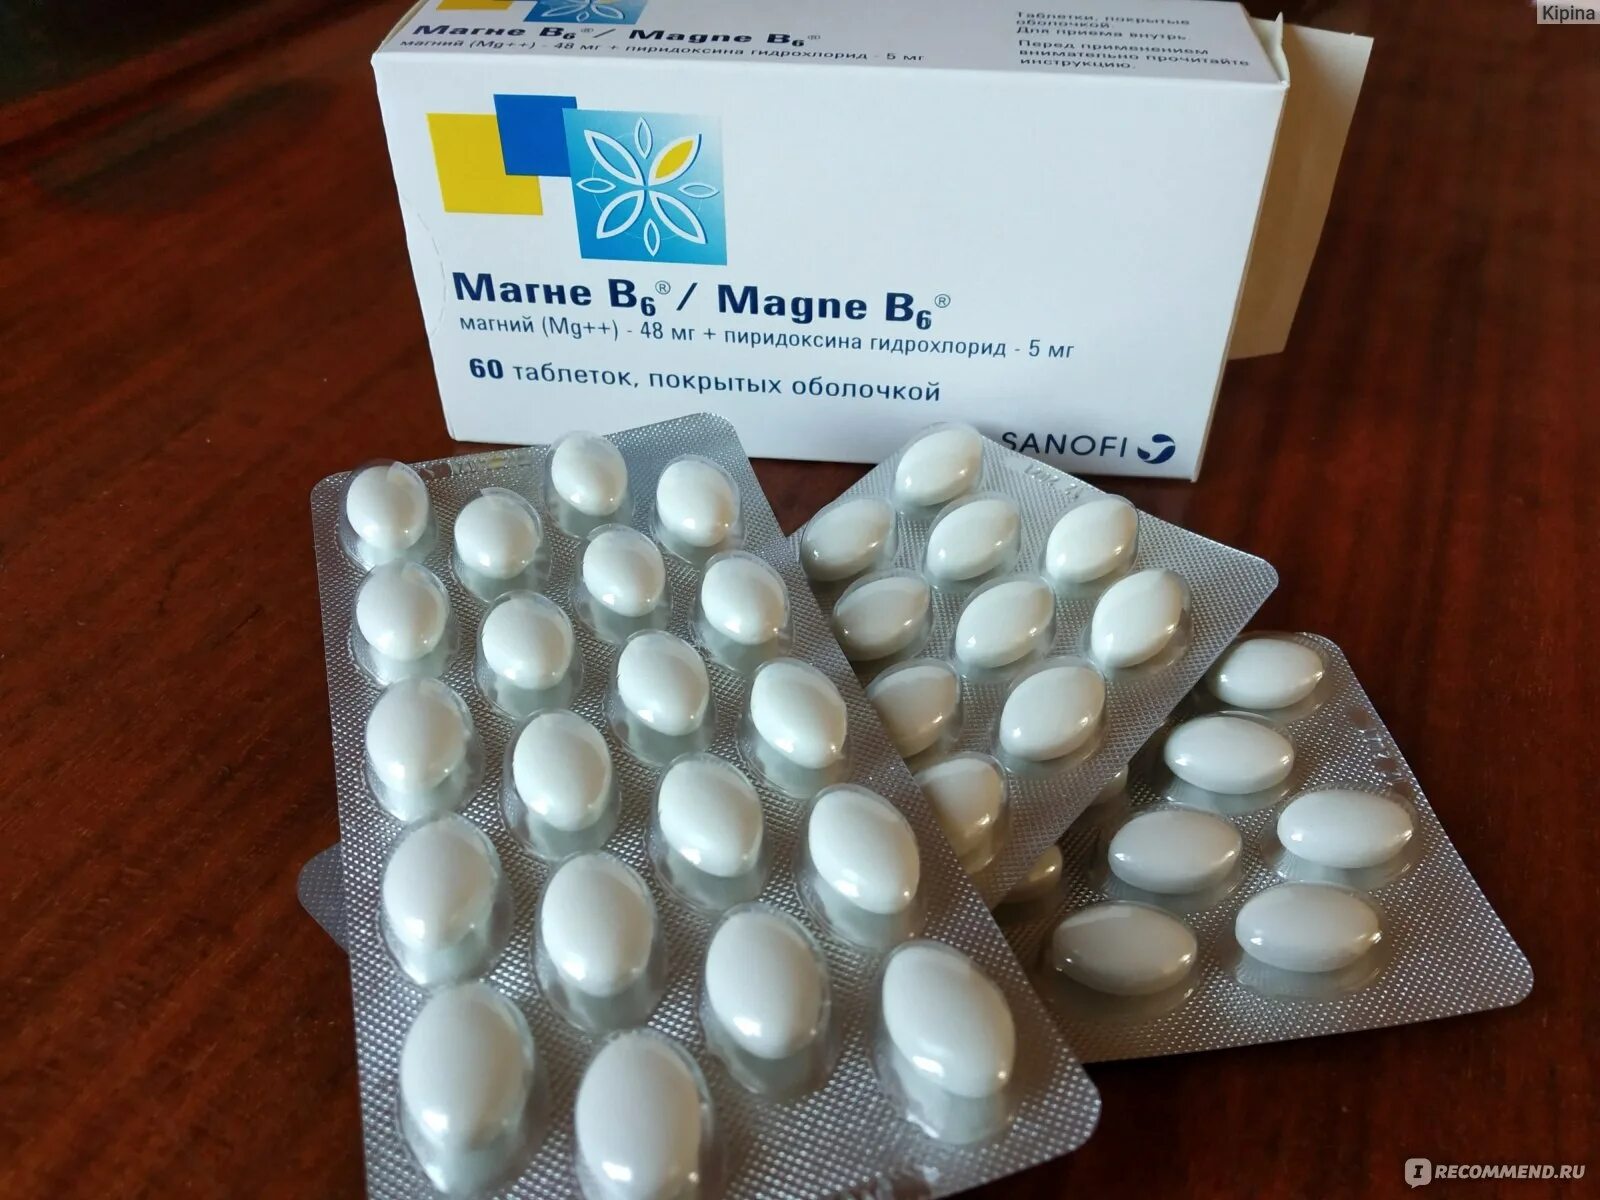 Препарат b6. Магне в6. Витамин магне в6. Магне b6 Sanofi. Магне б6 таблетки для беременных.